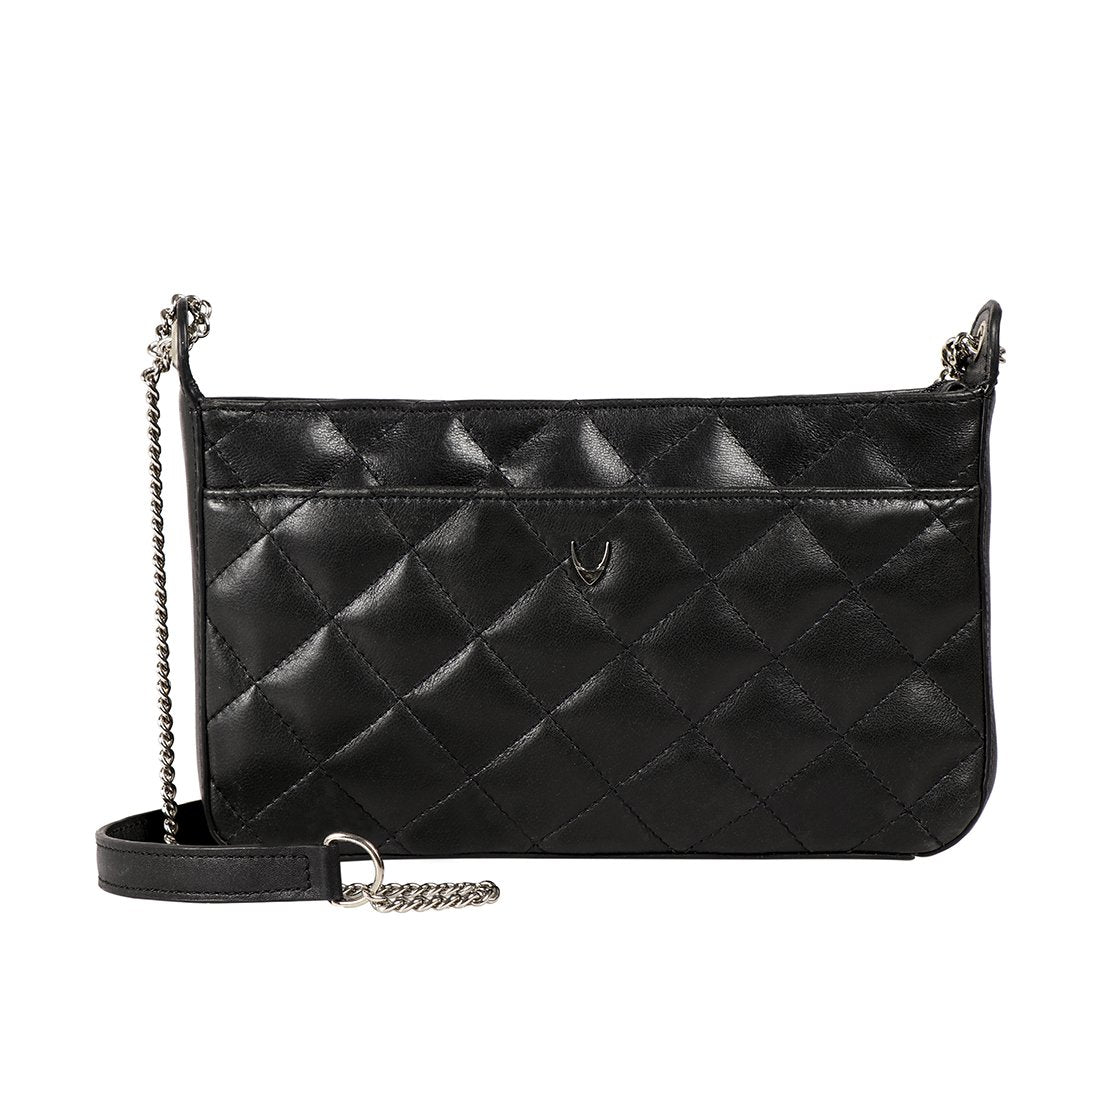 Buy Black Fl Keira 04 Sling Bag Online - Hidesign